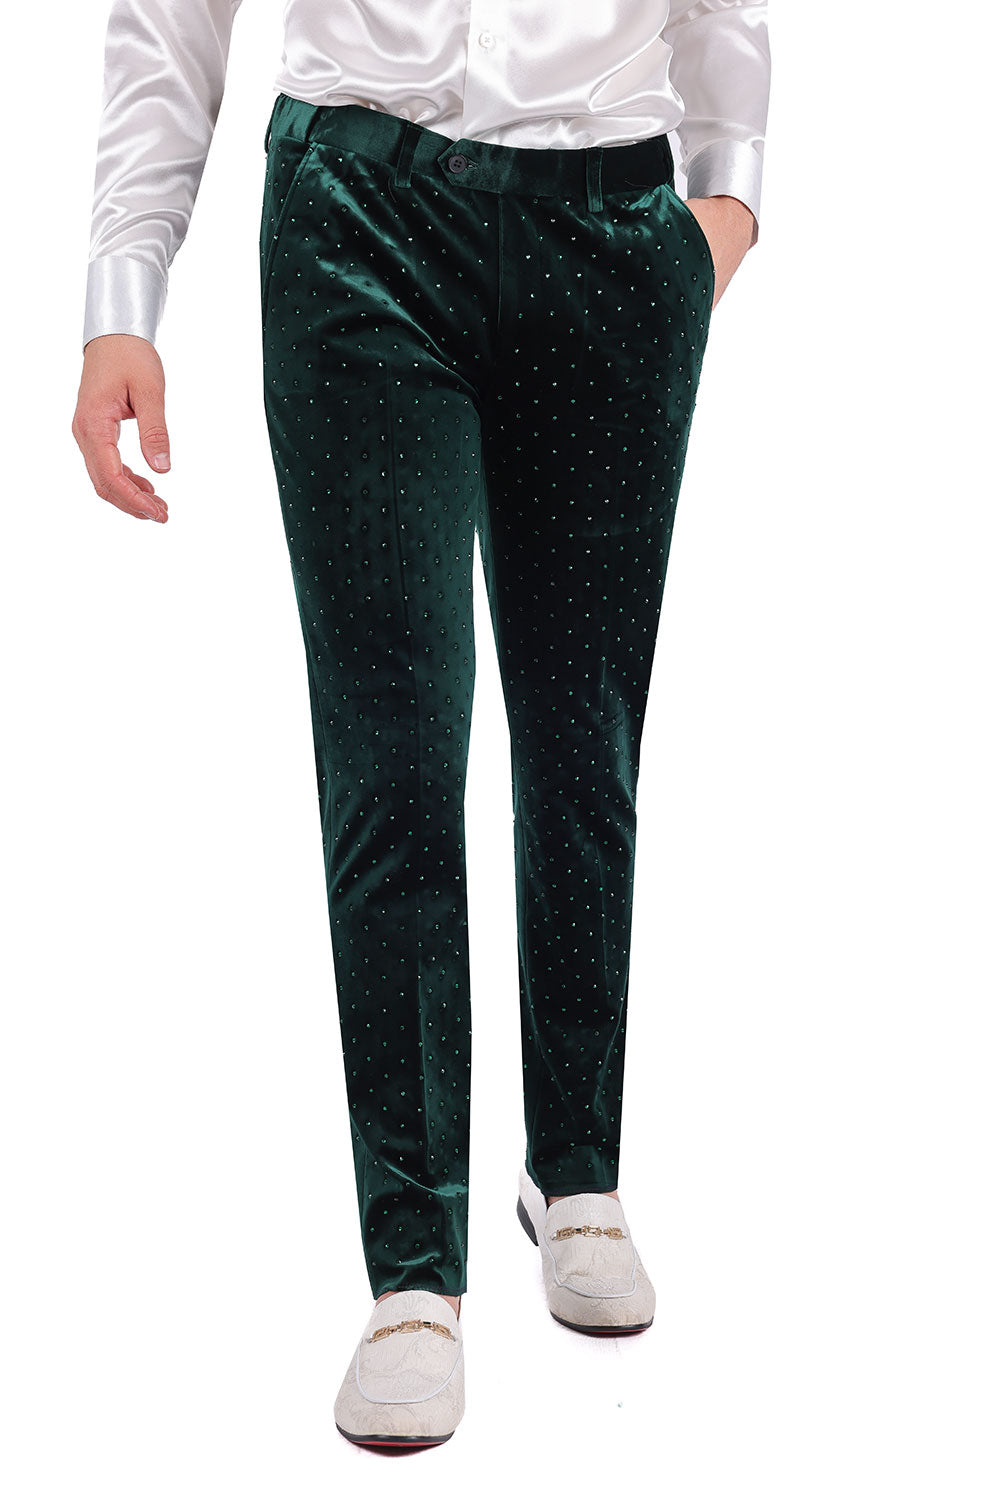 Barabas Men's Rhinestone Velvet Slim Fit Chino Dress Pants 2CP3020 Hunter Green